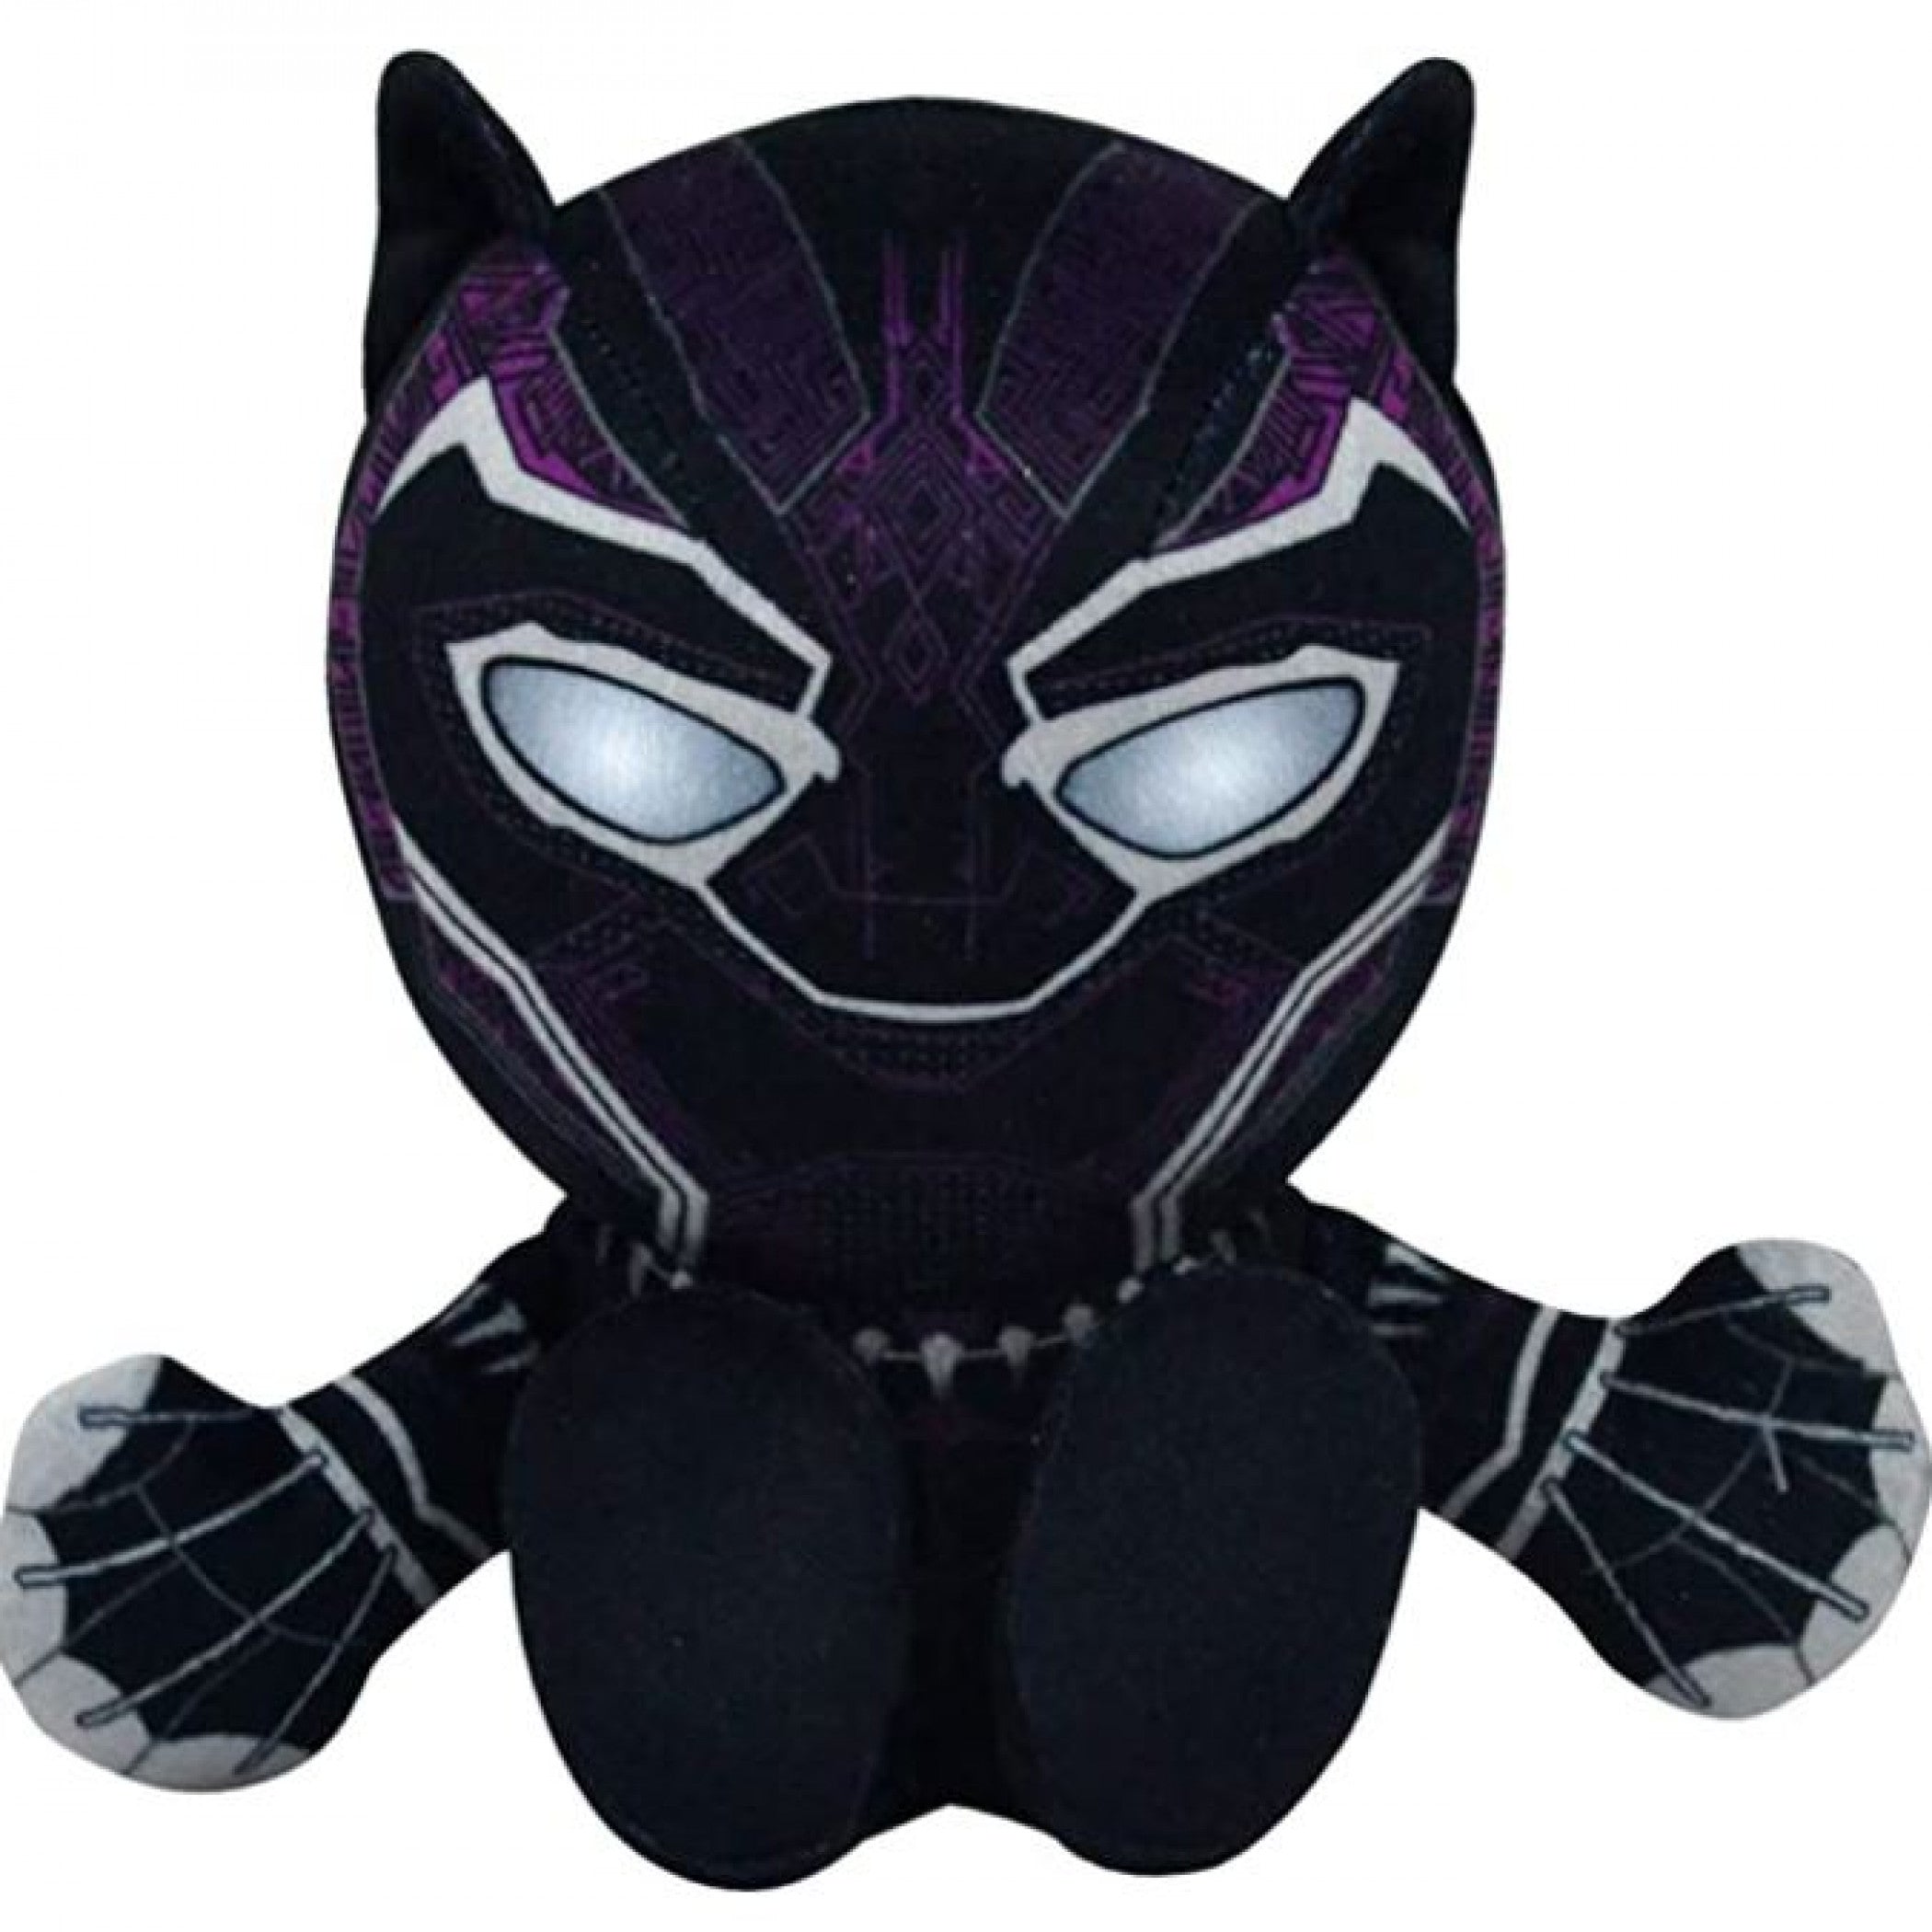 Marvel Black Panther 8 Inch Kuricha Sitting Plush Doll